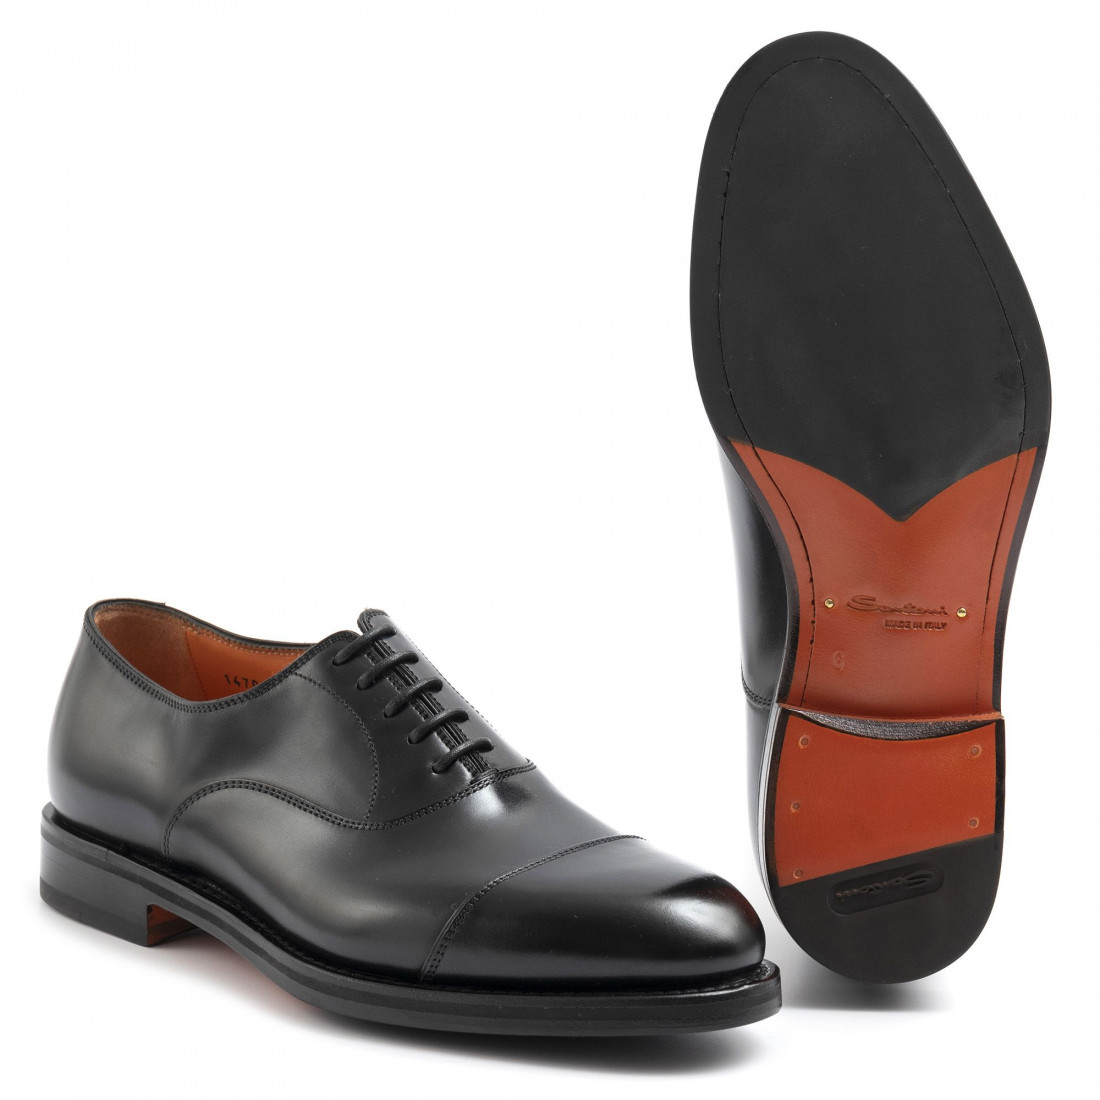 Men's Santoni oxford shoes in black leather